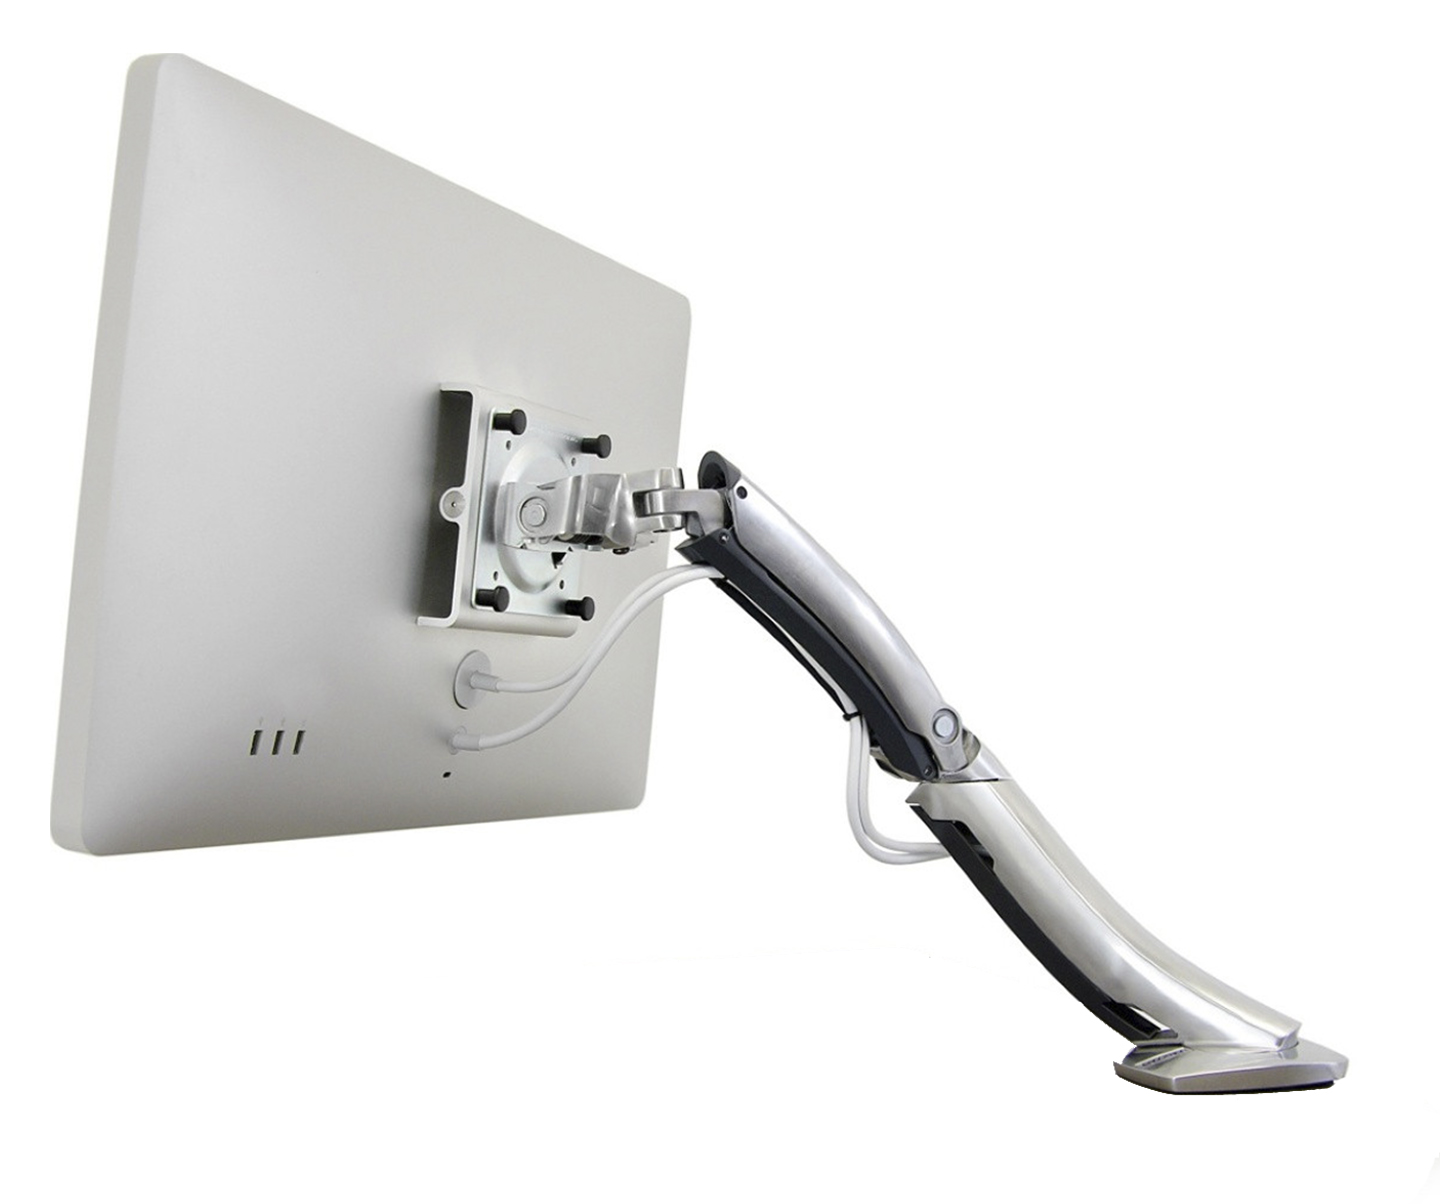 Ergotron MX bordmonteret arm til TV/Skærm - Max 13,6kg